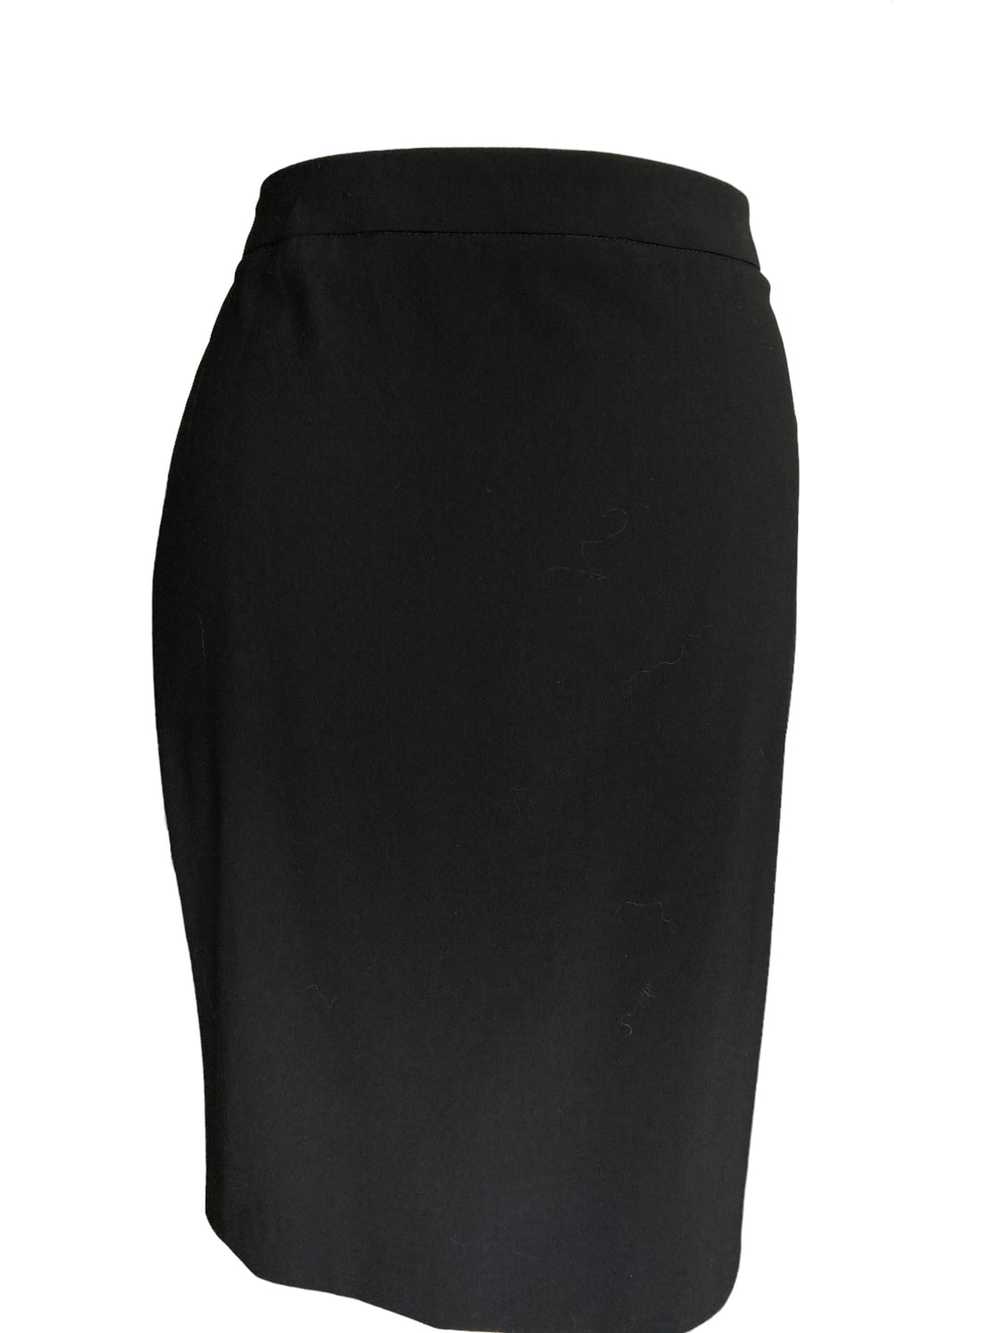 Wolford Black Pencil Skirt, M - image 3